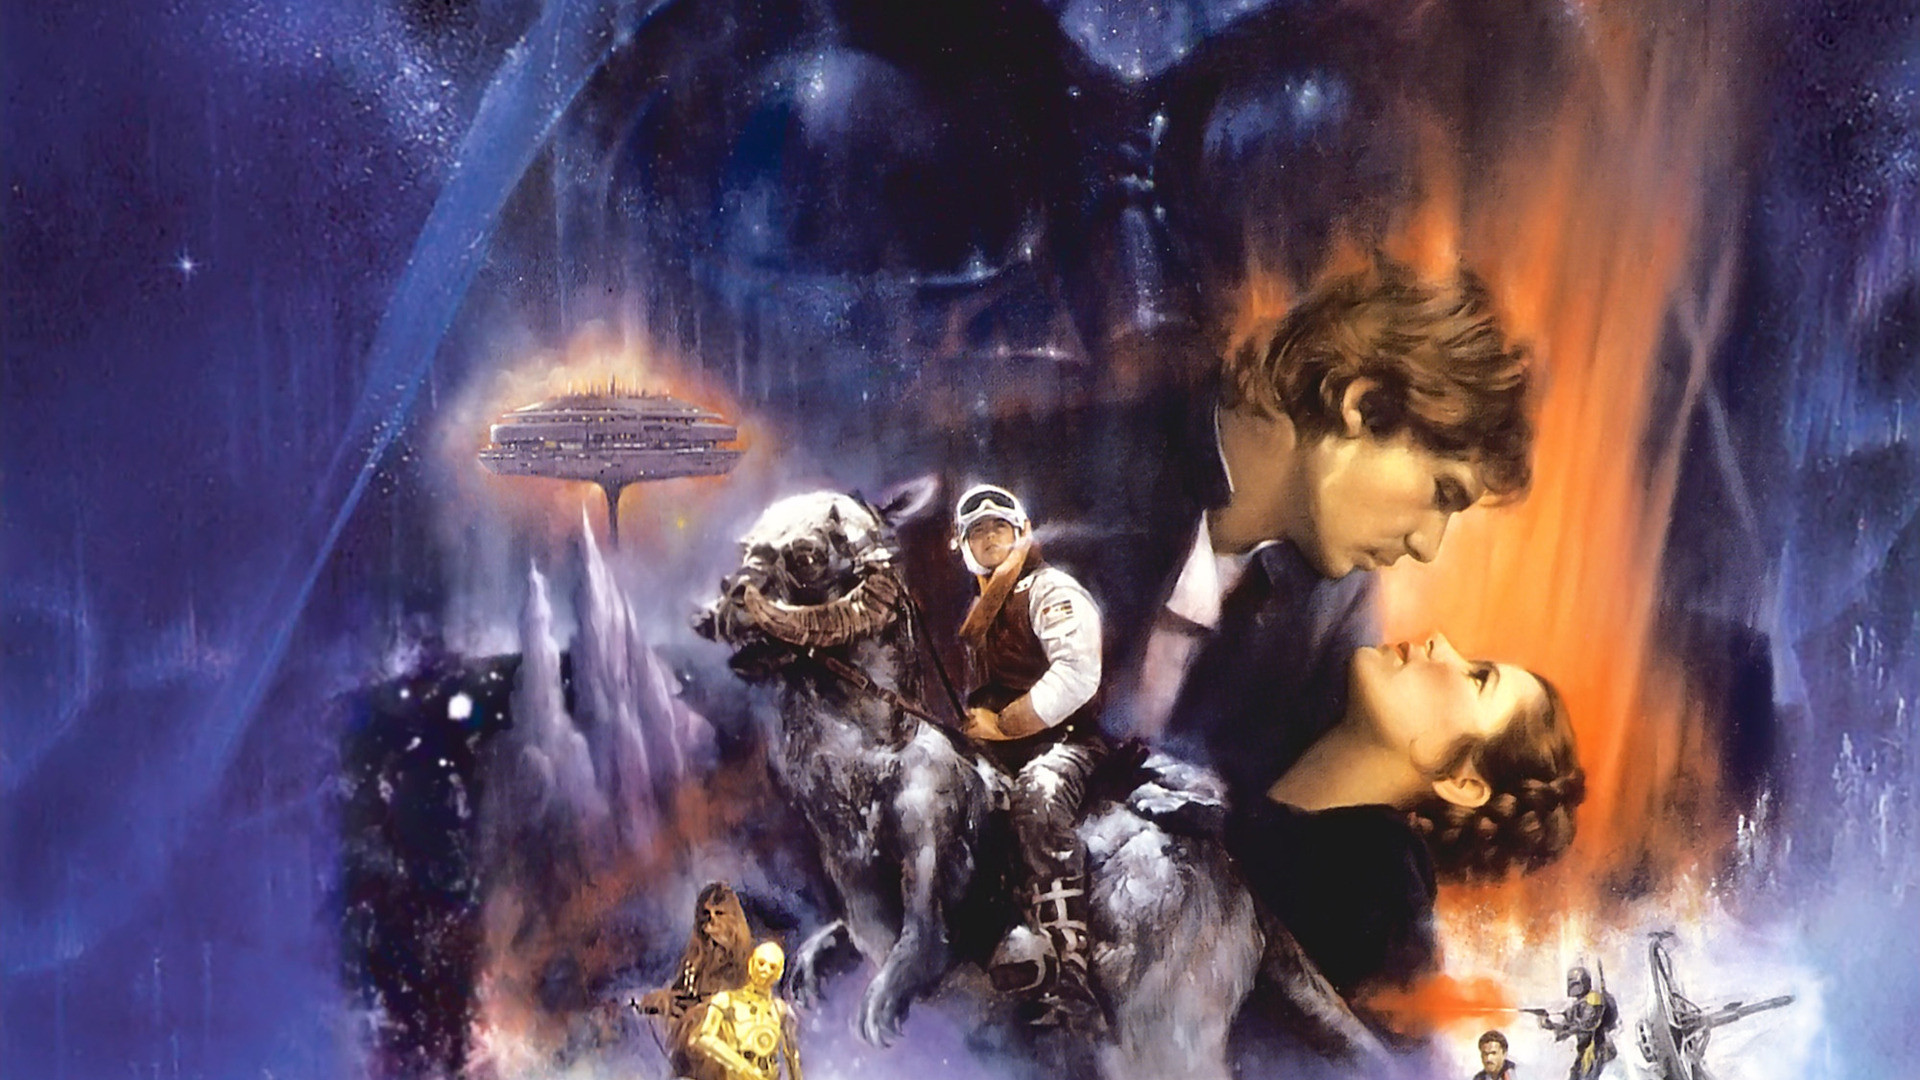 Star Wars Episode 7 Official Poster - wallpaper.